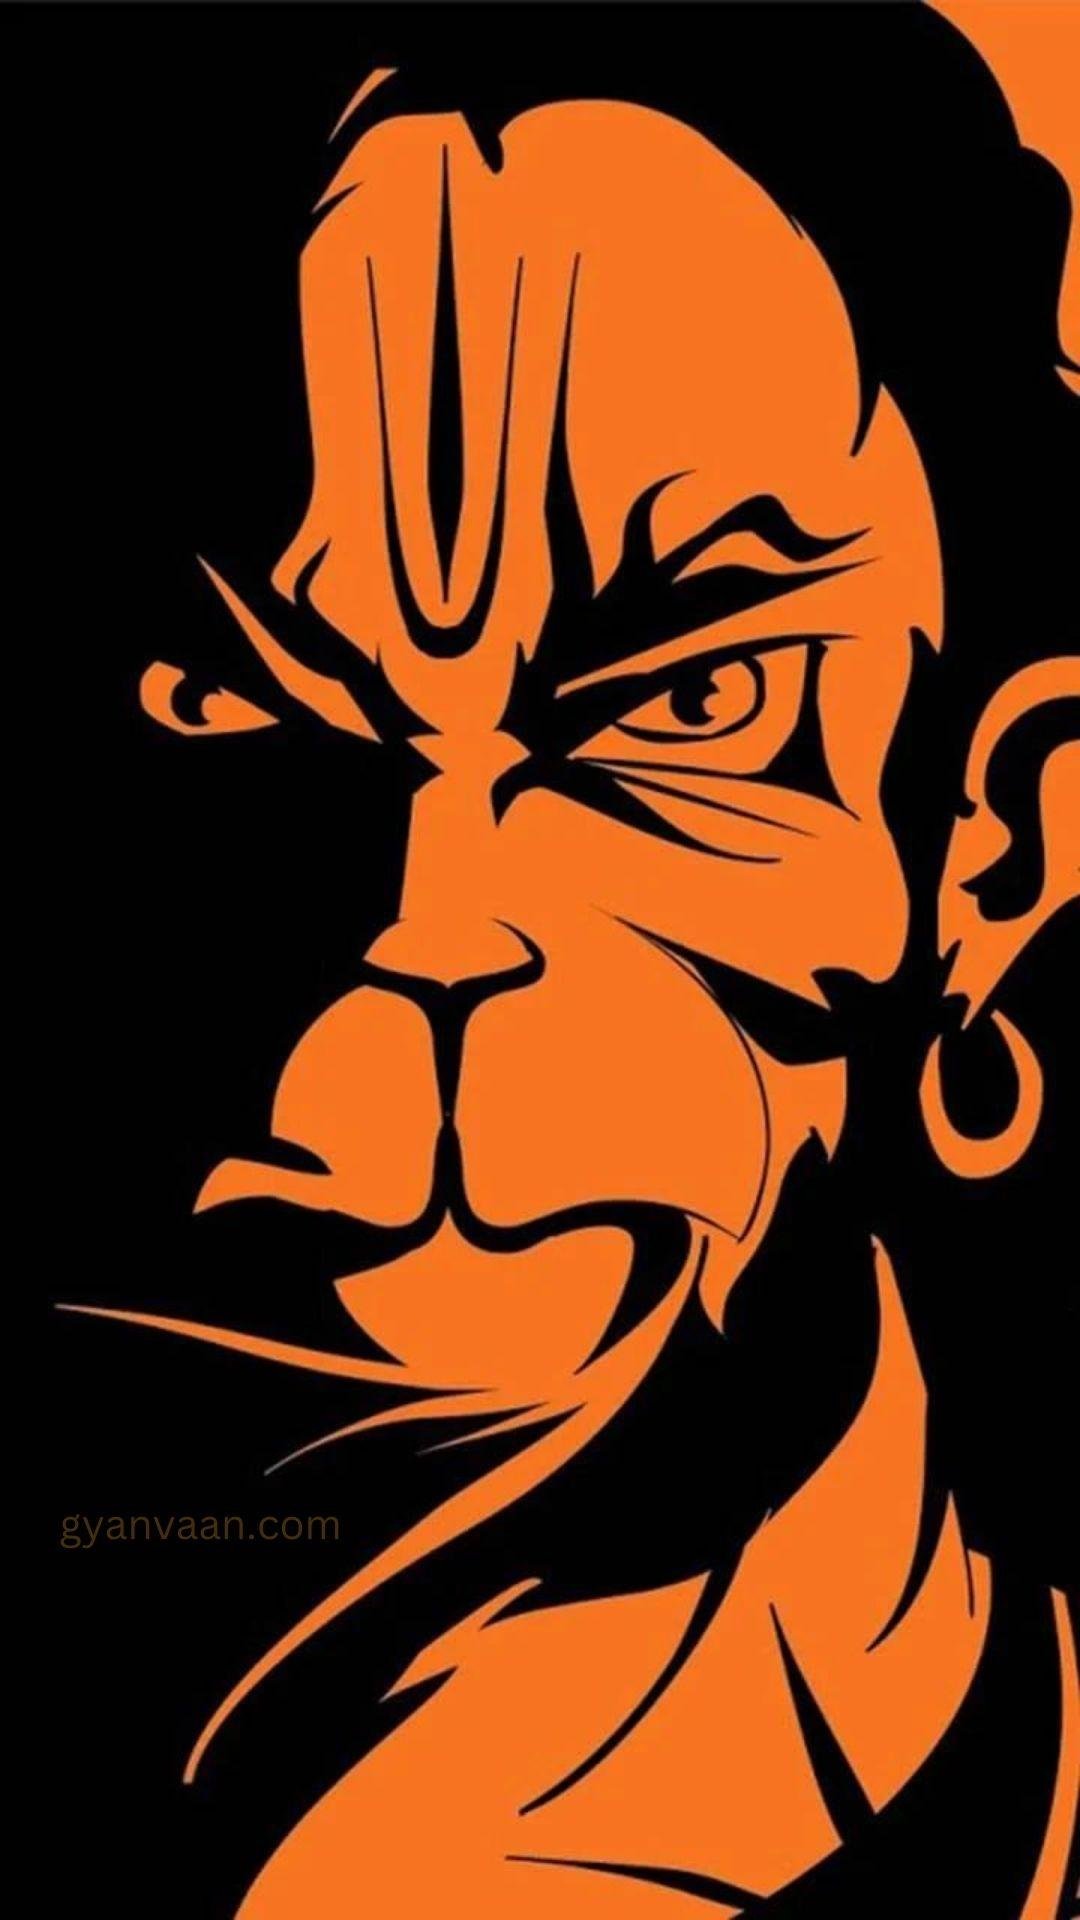 Hanuman Quotes Shayari And Whatsapp Status For Mobile With Hanuman Images And Photos 57 - Hanuman Images